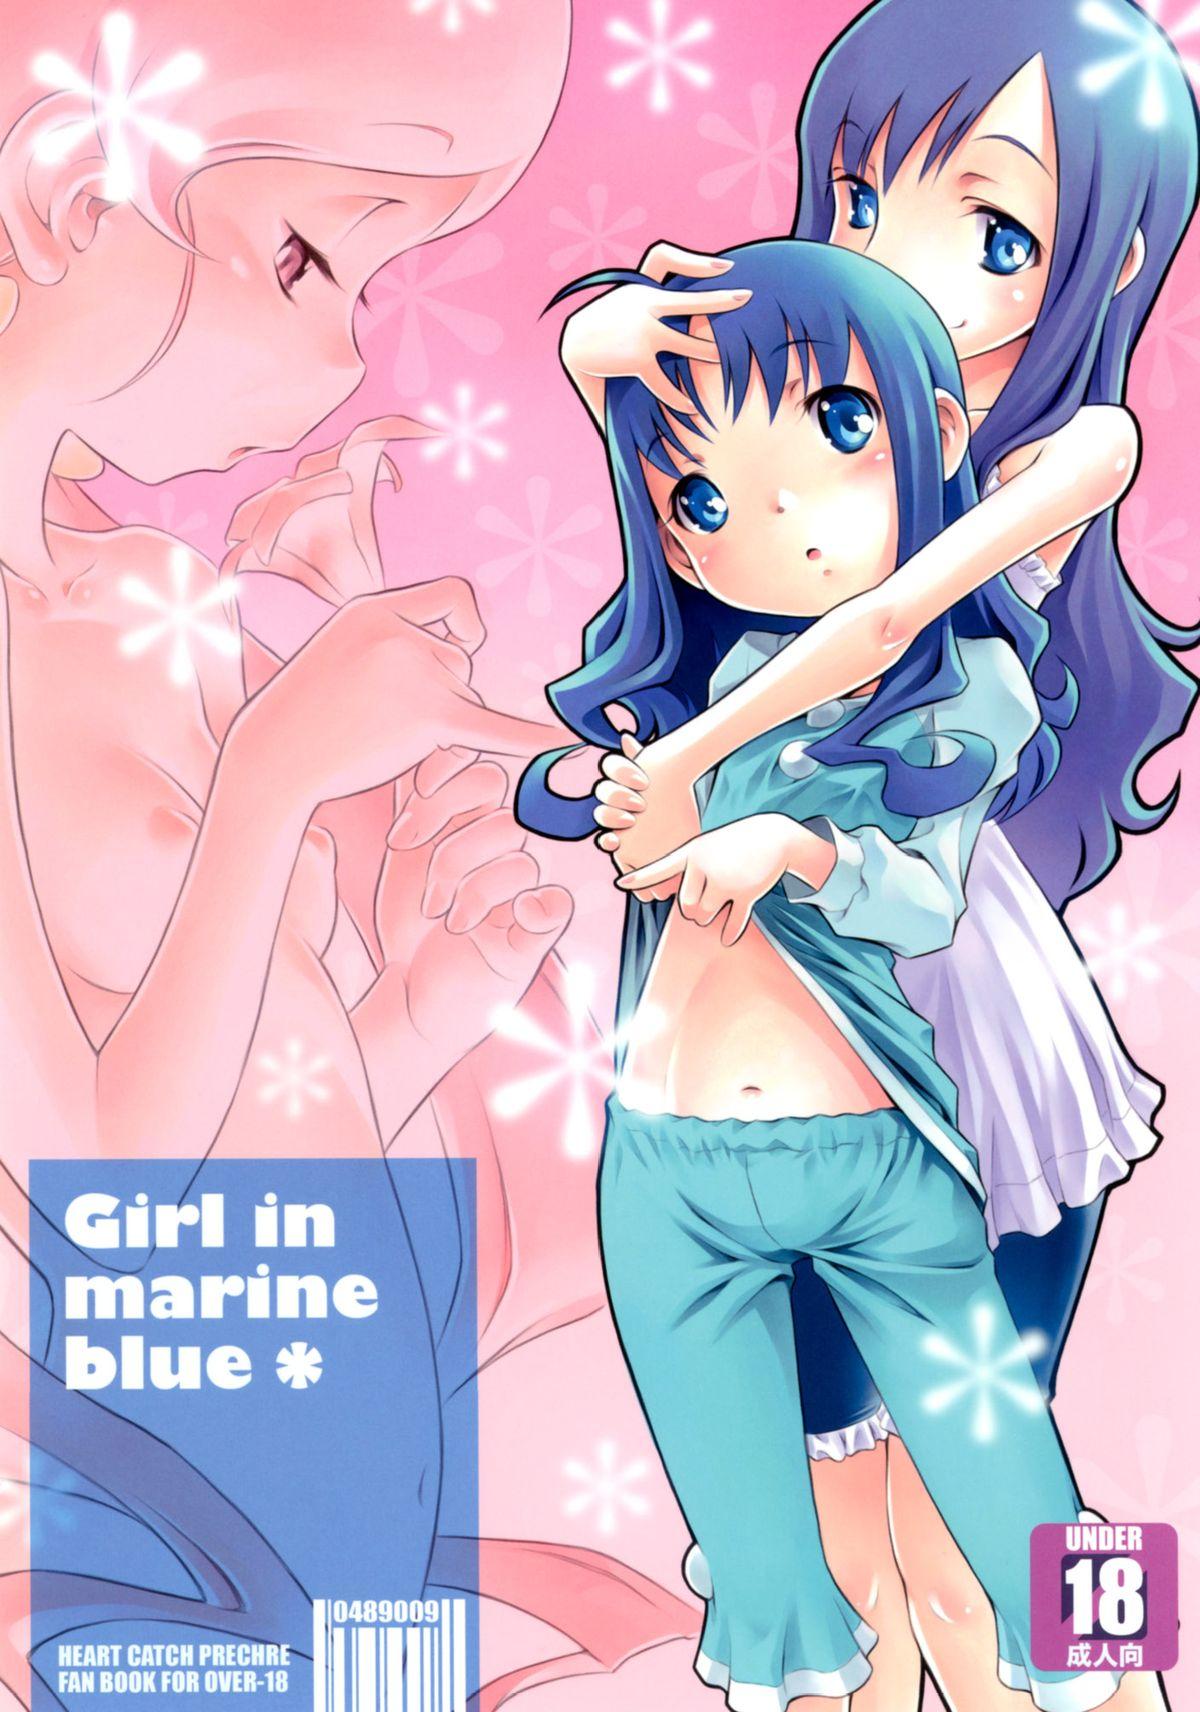 Girl in marine blue * 0